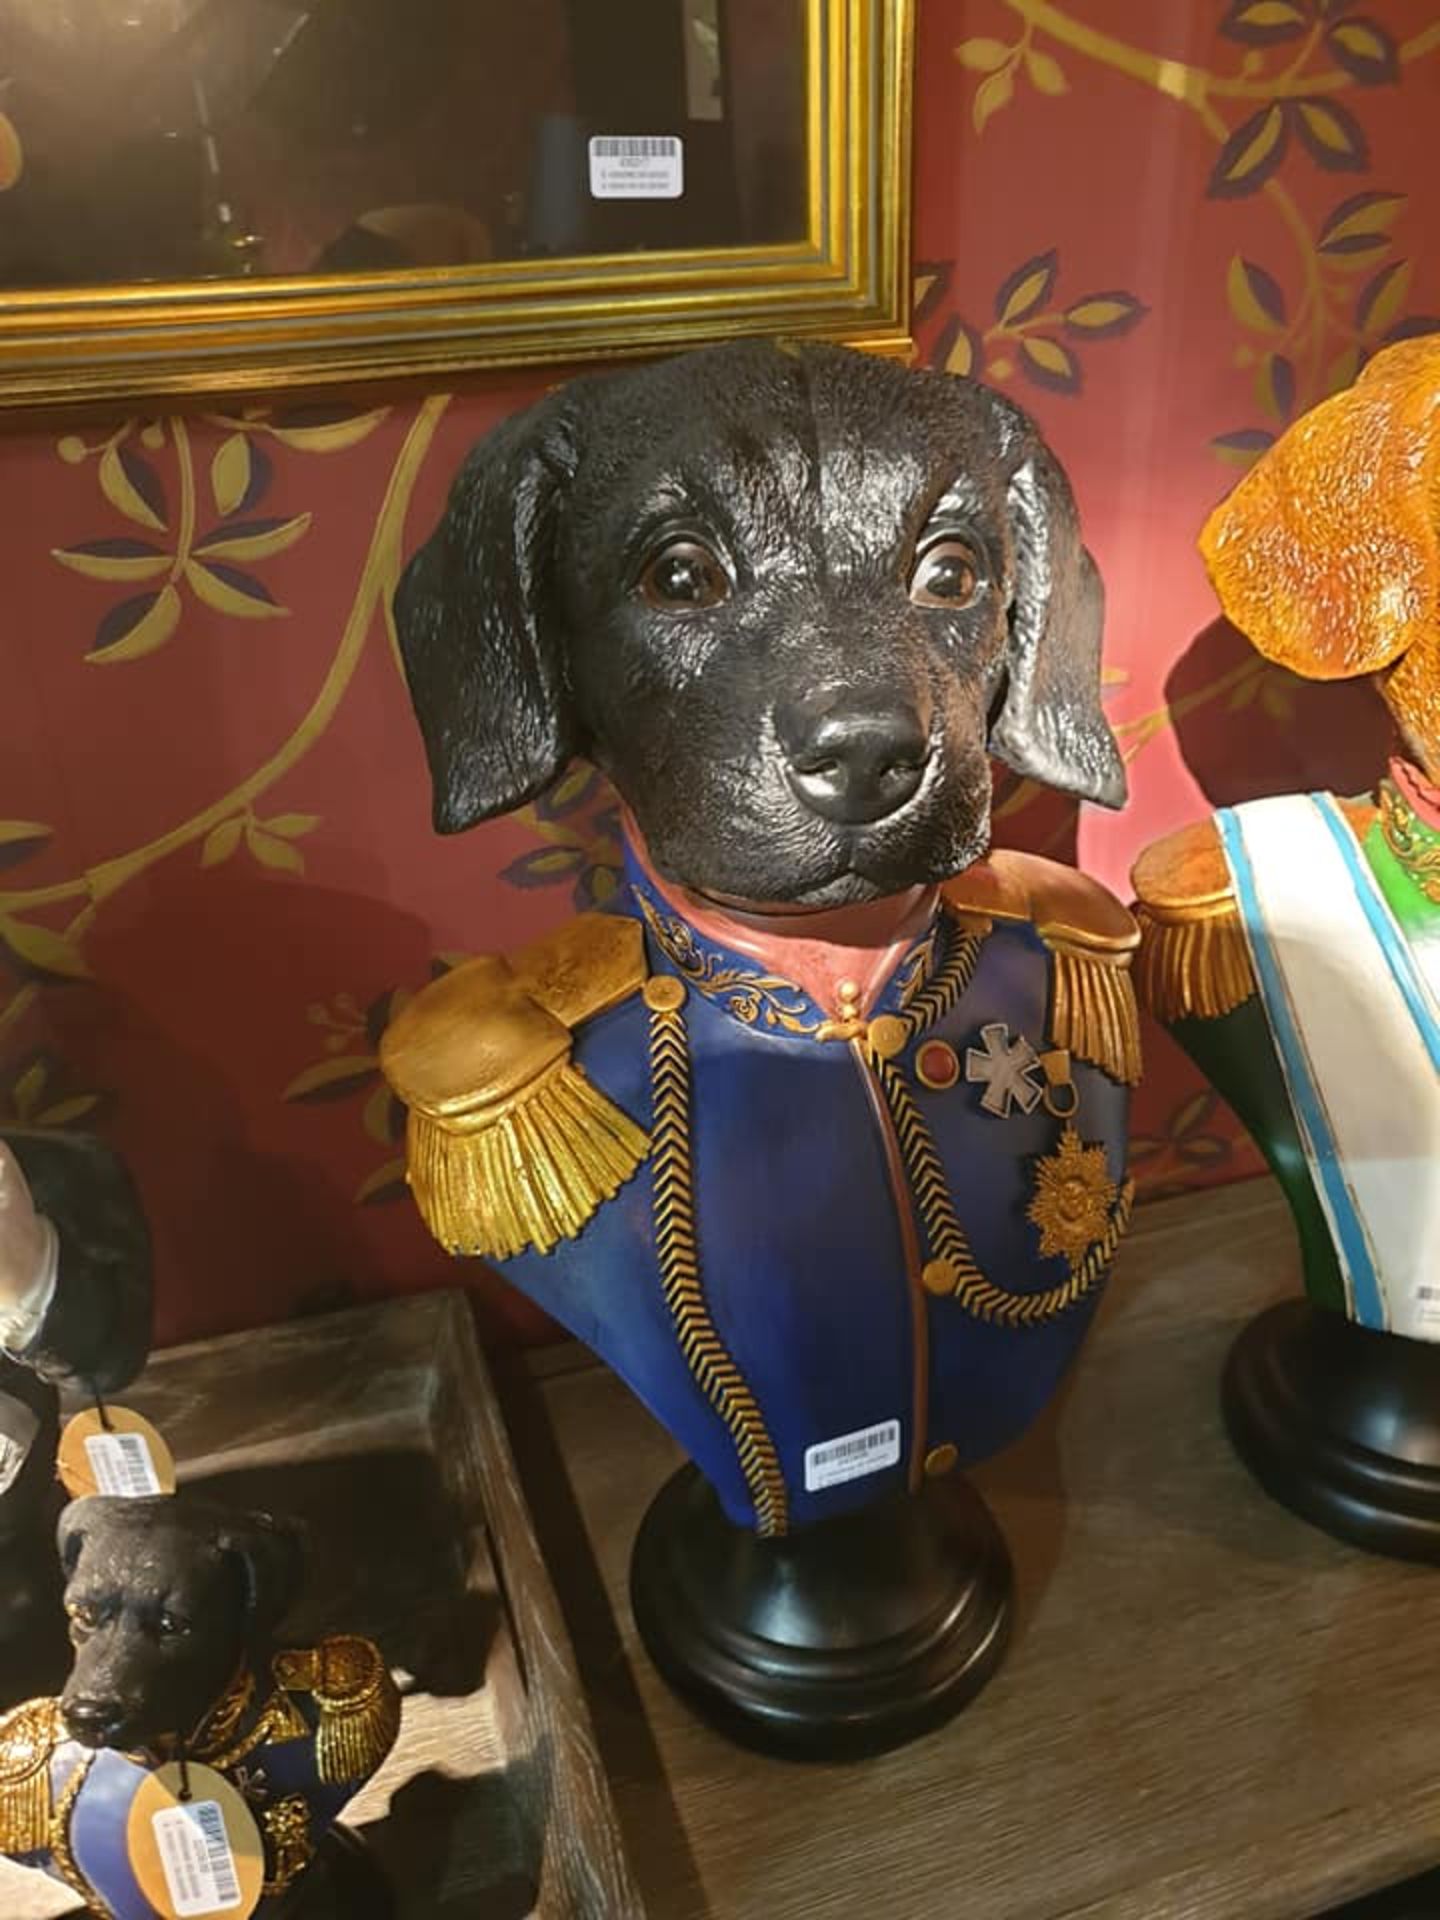 Labrador Bust General Resin Sculpture A Novelty Objet For All Those Dog Lovers 54cm